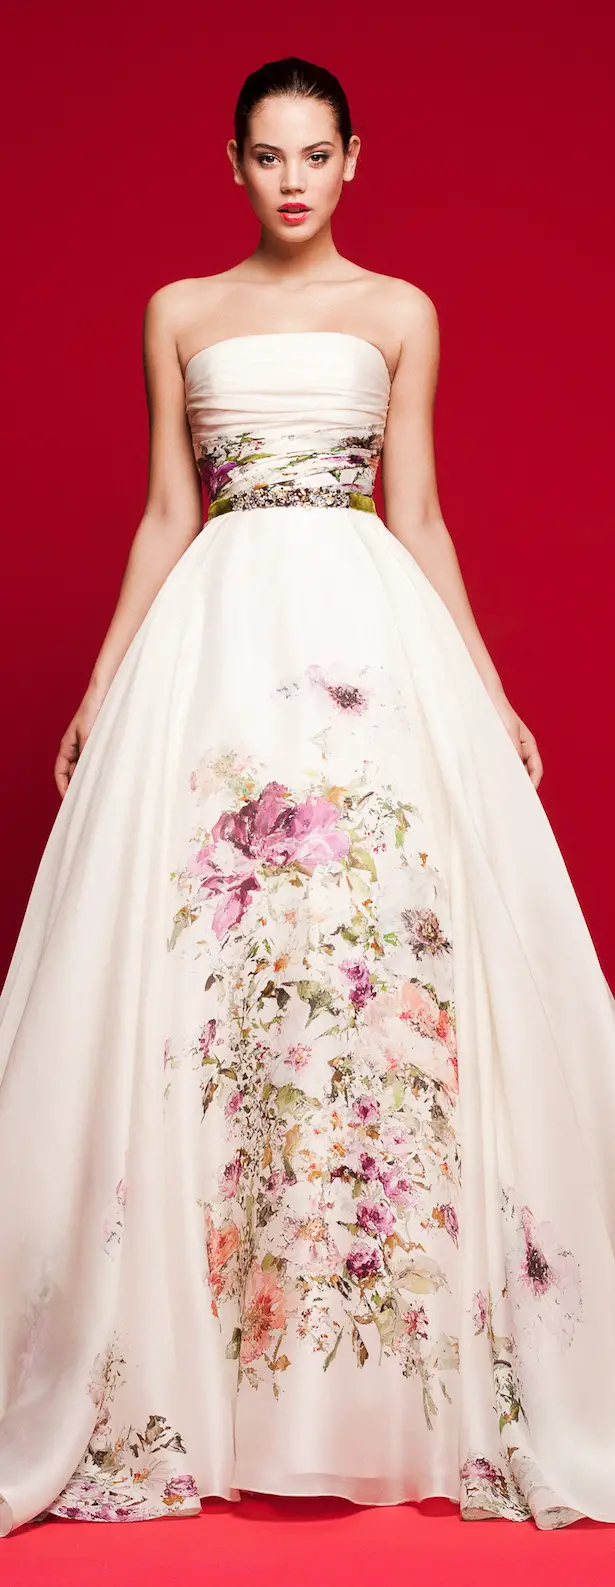 Floral Wedding Dress - Daalarna 2018 Love Story Bridal Collection